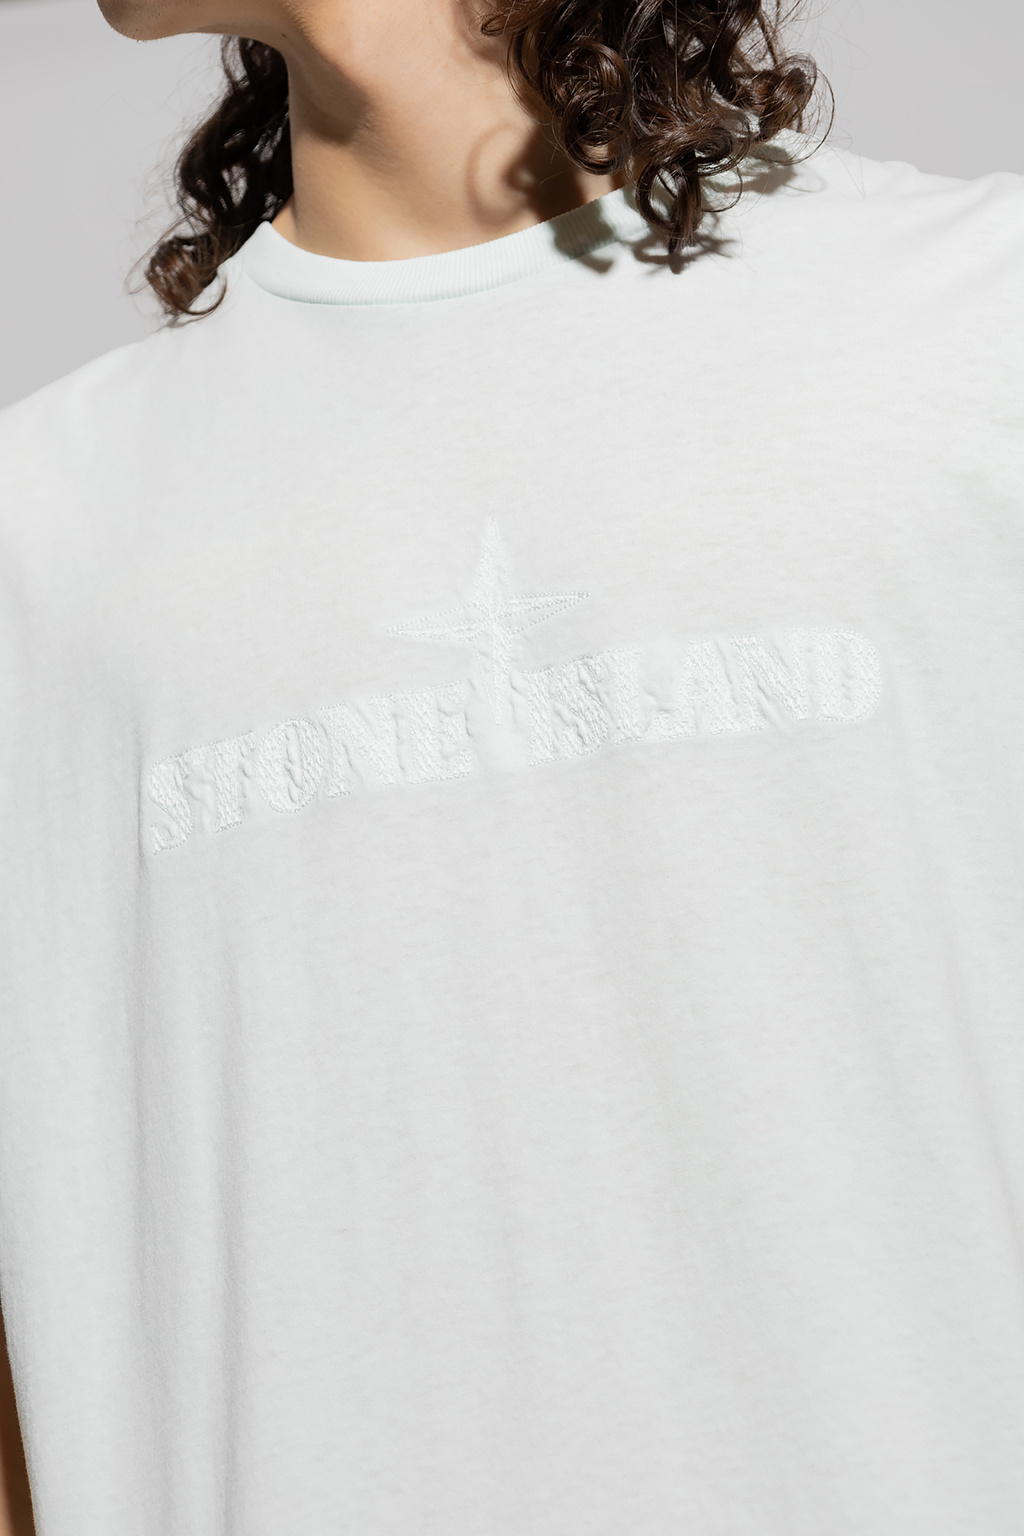 Stone Island Pepe Jeans Eben t-shirt in white